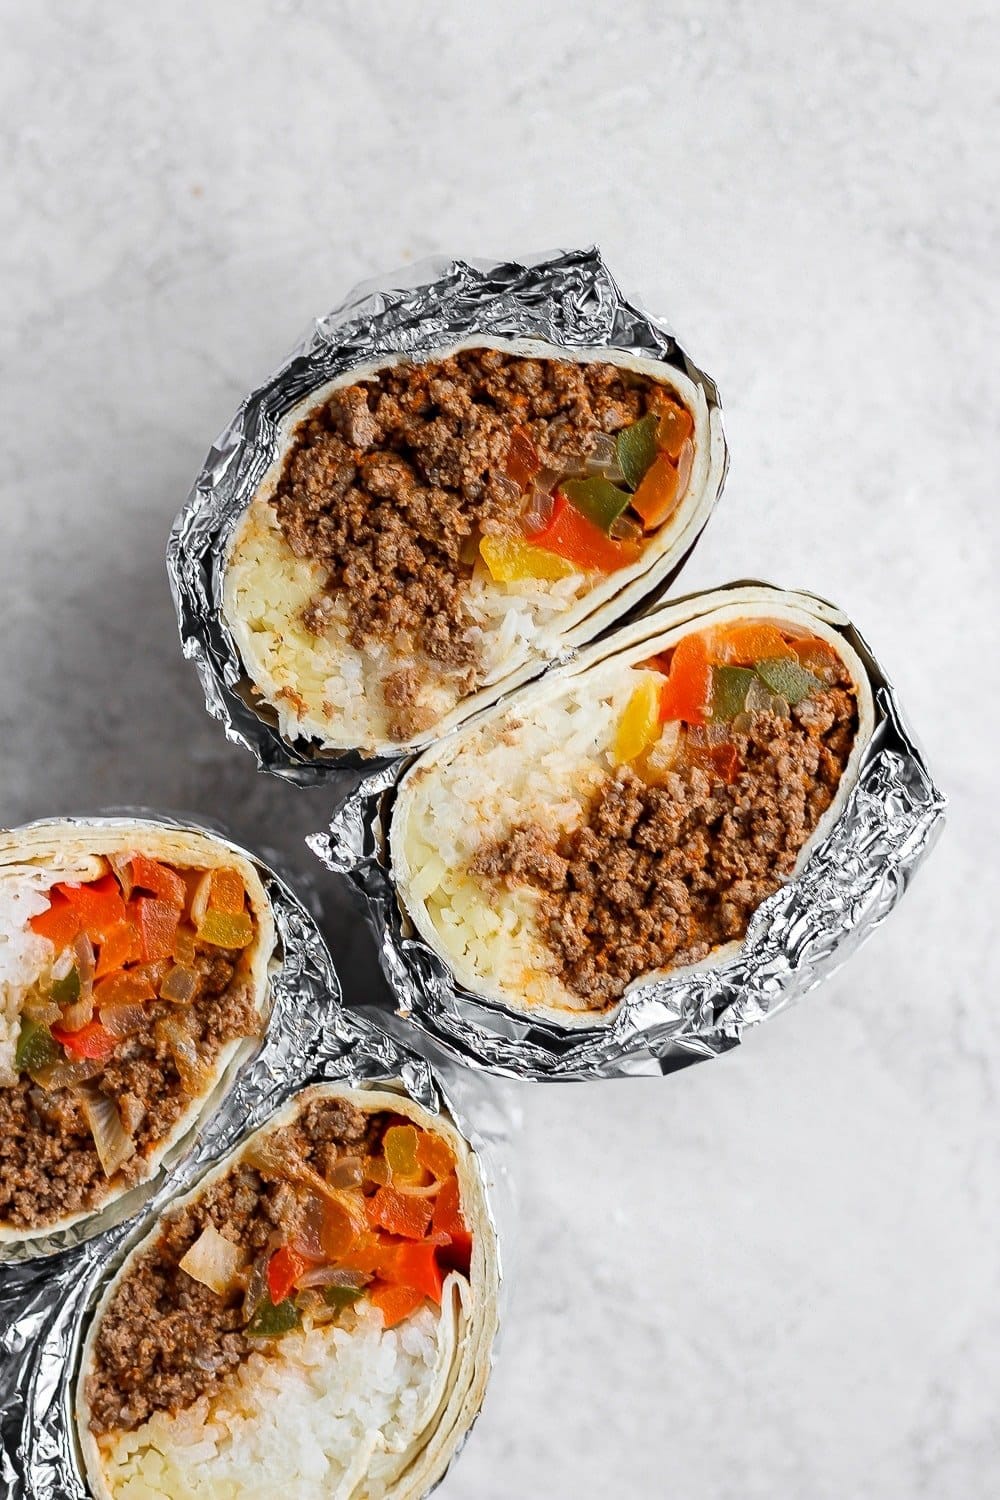 https://fitfoodiefinds.com/wp-content/uploads/2019/12/meal-prep-burritos-8.jpg